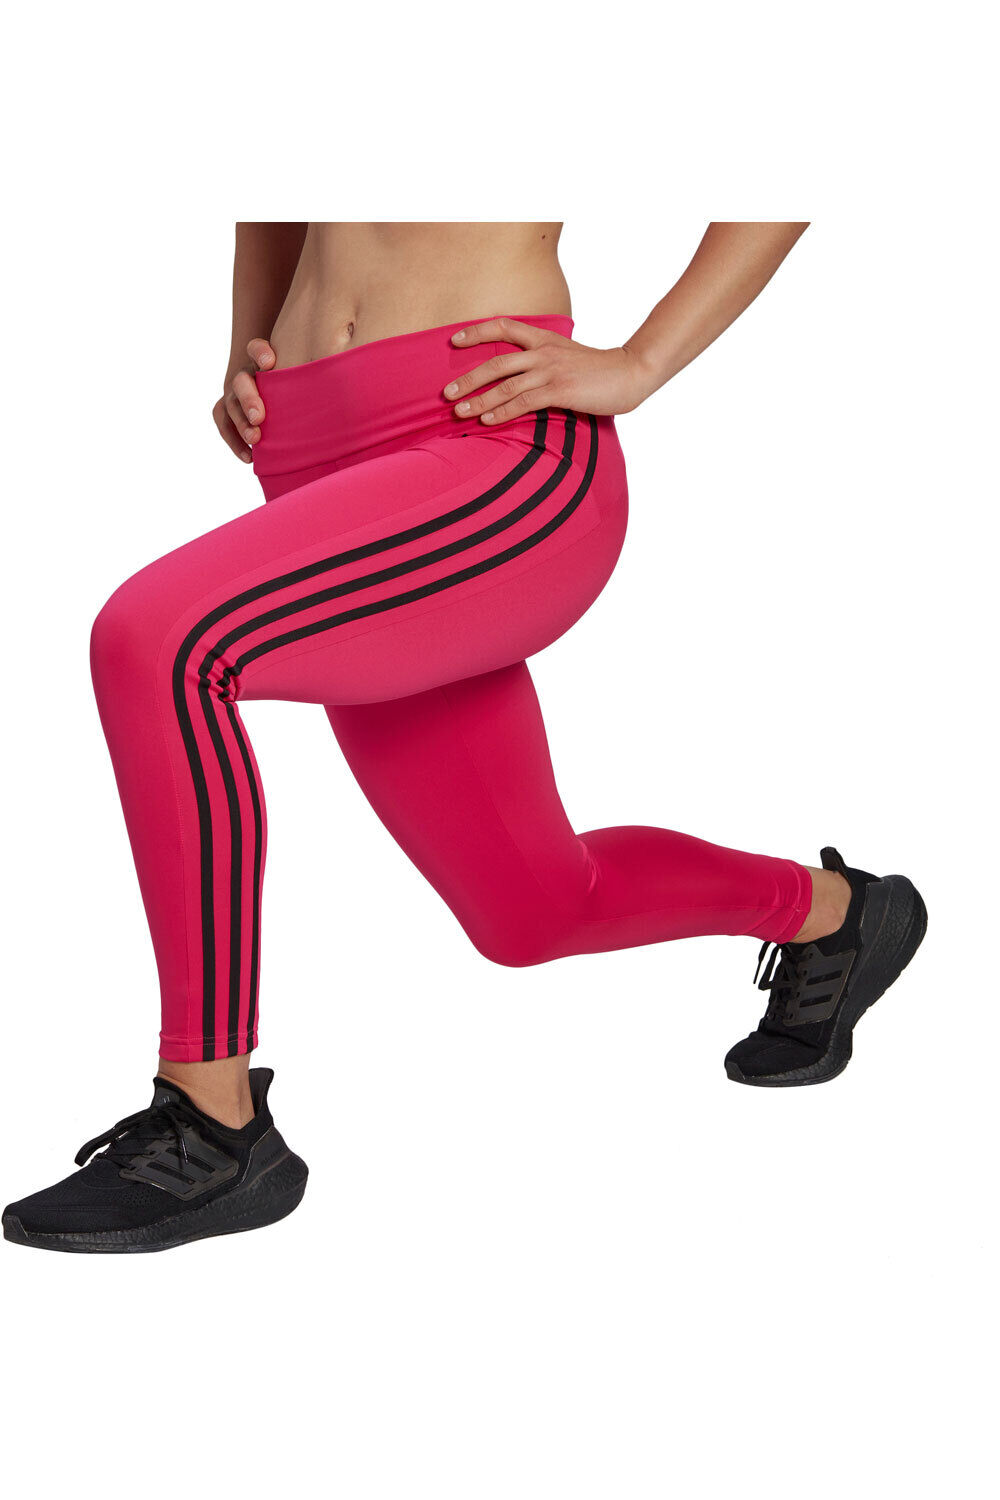 adidas pantalones y mallas largas fitness mujer 7/8 Designed To Move High-Rise Sport 3 bandas vista frontal